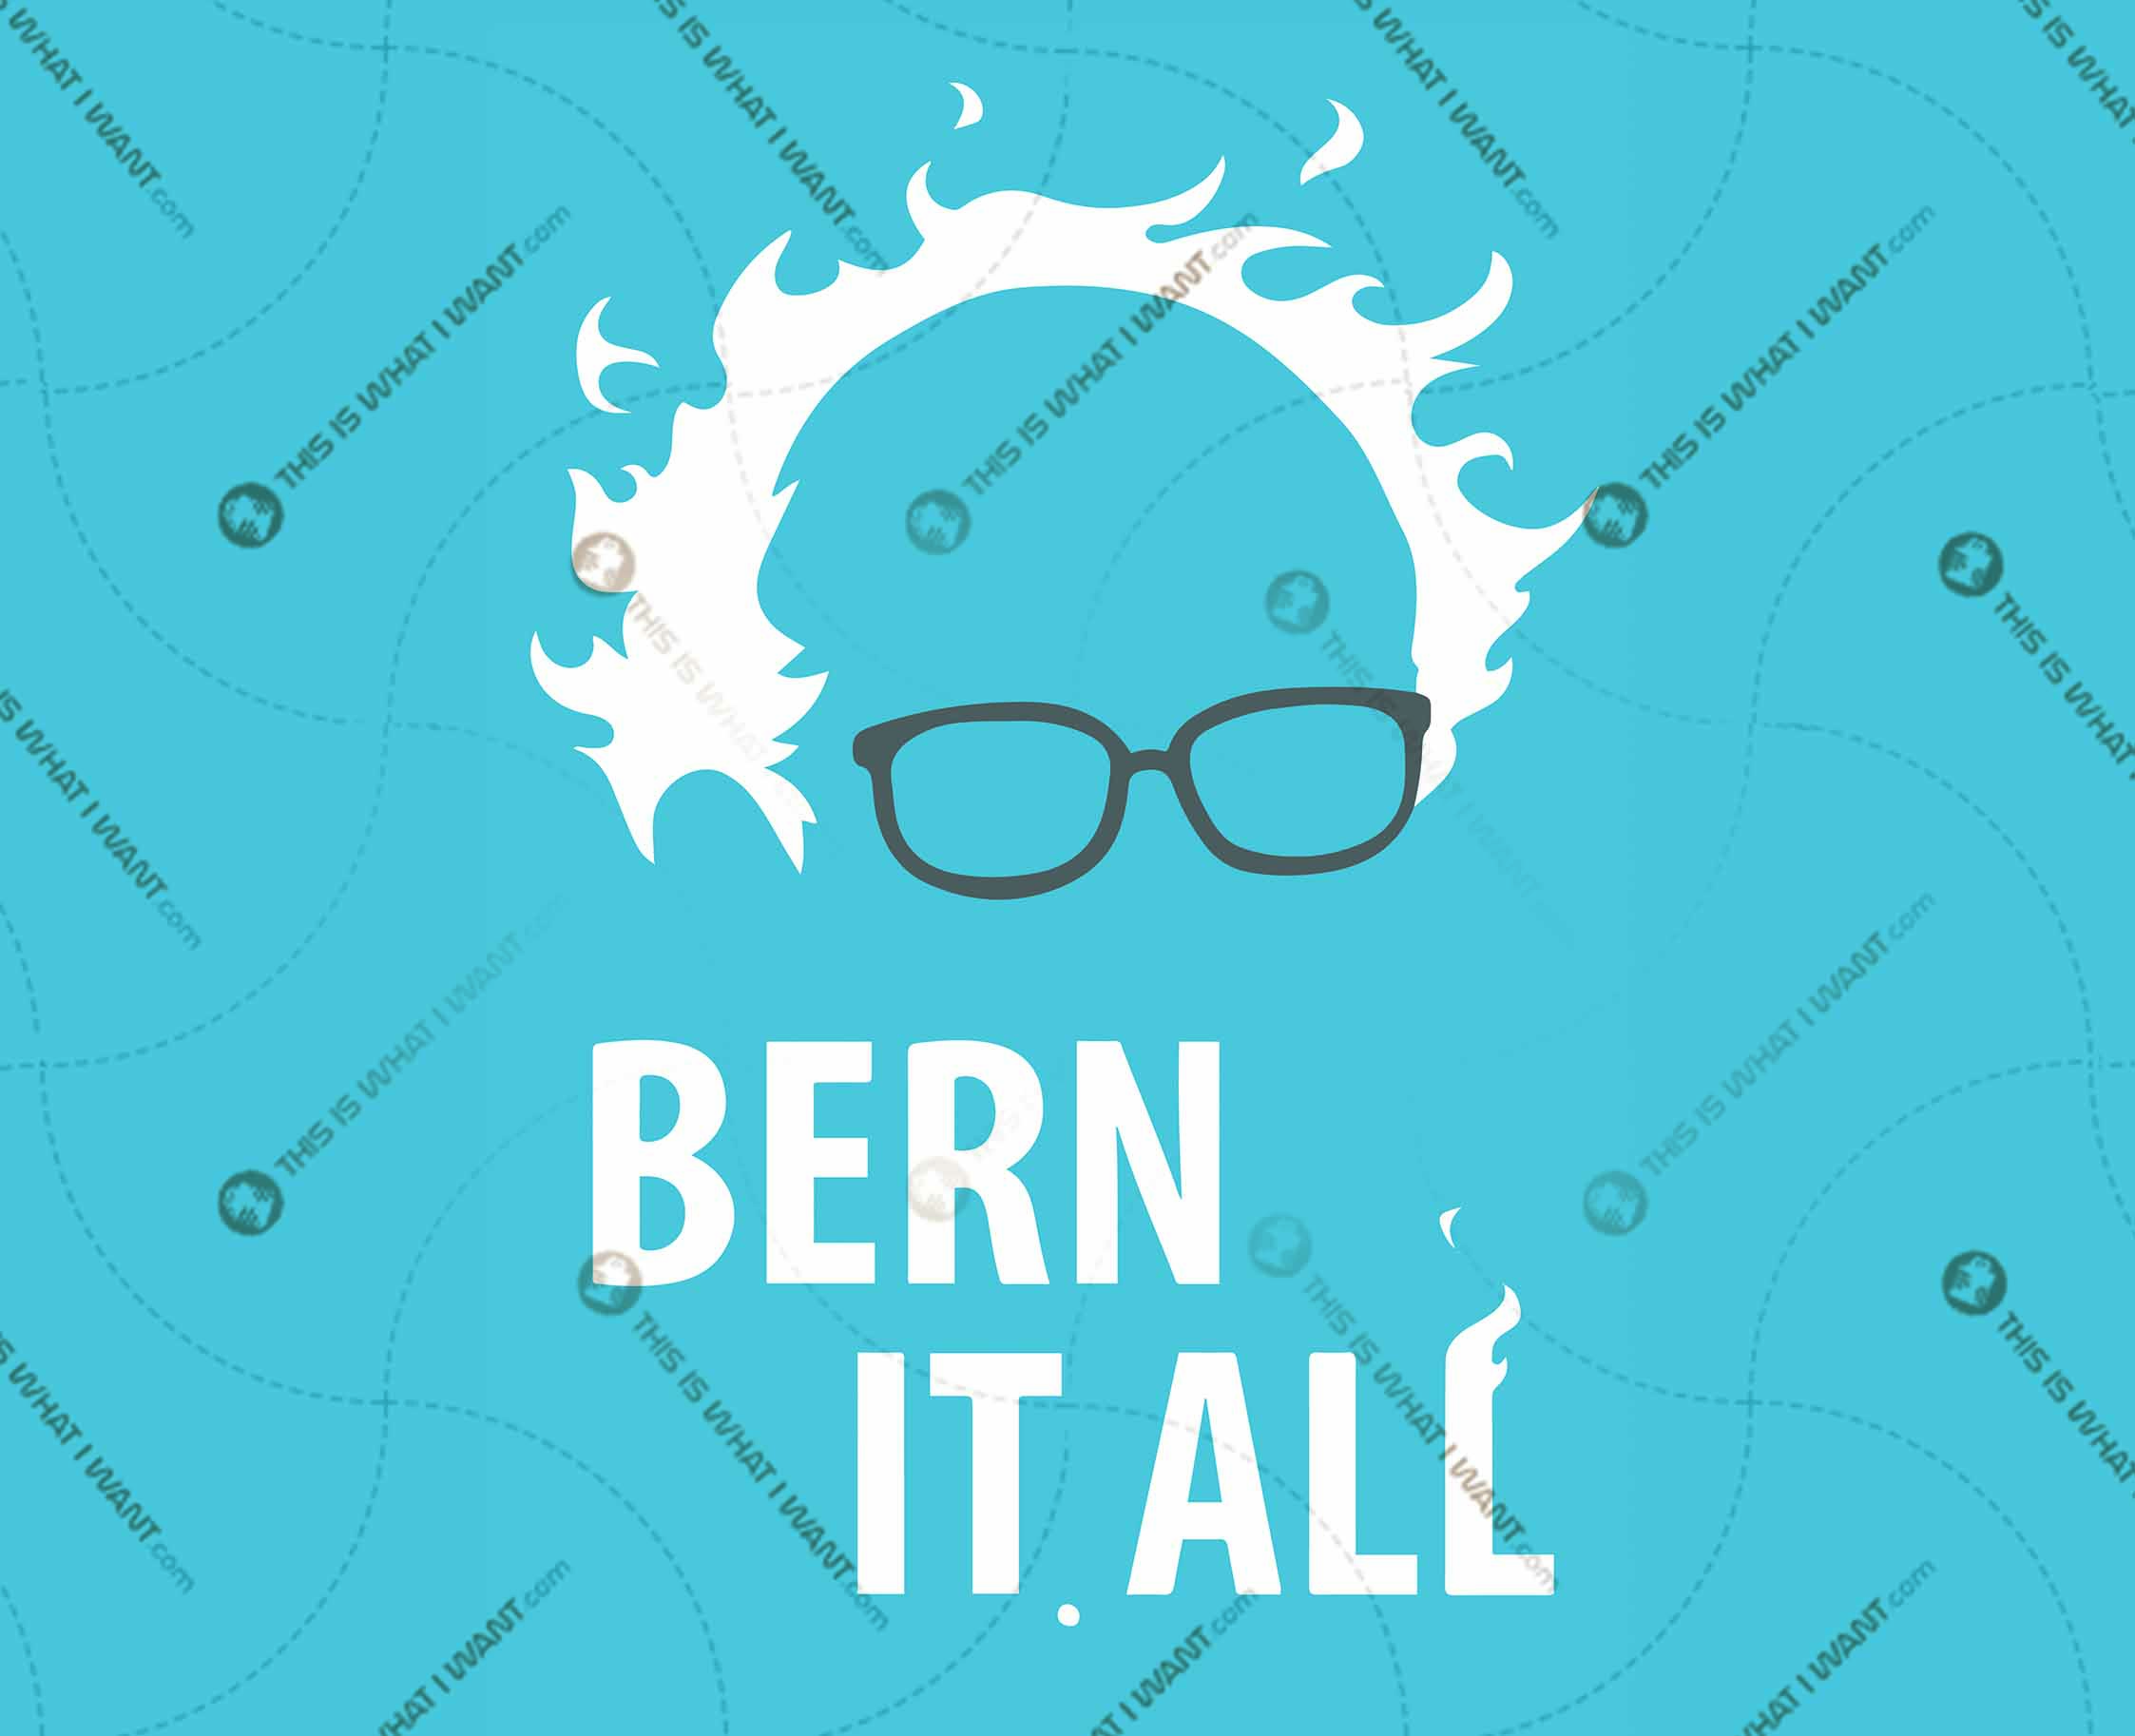 Bern it all - Bernie Sanders for President